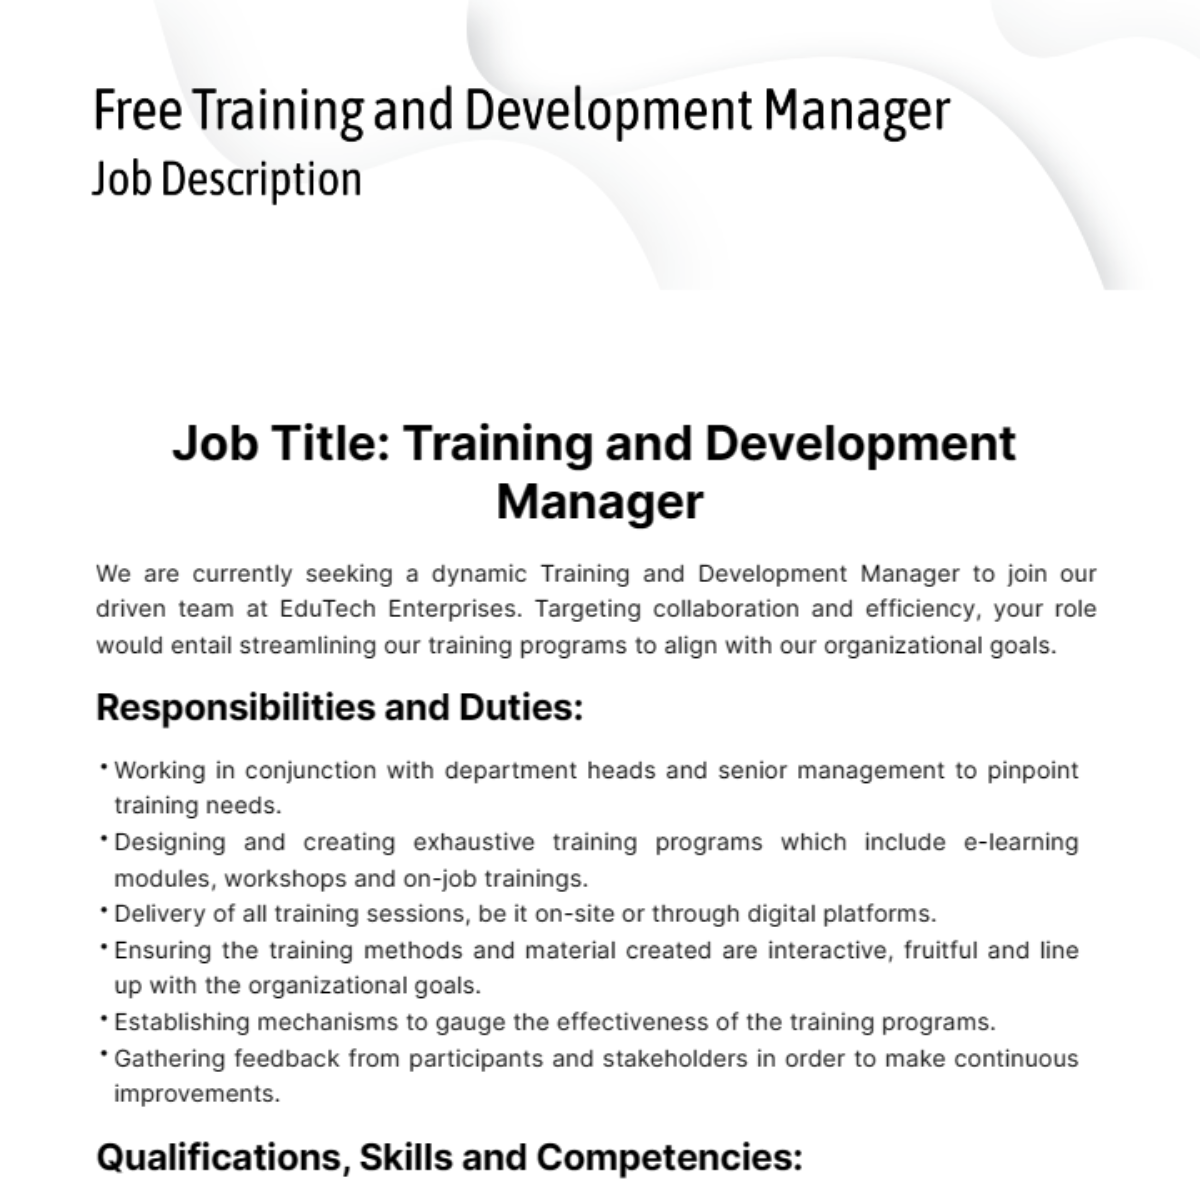 Free Training and Development Manager Job Description Template